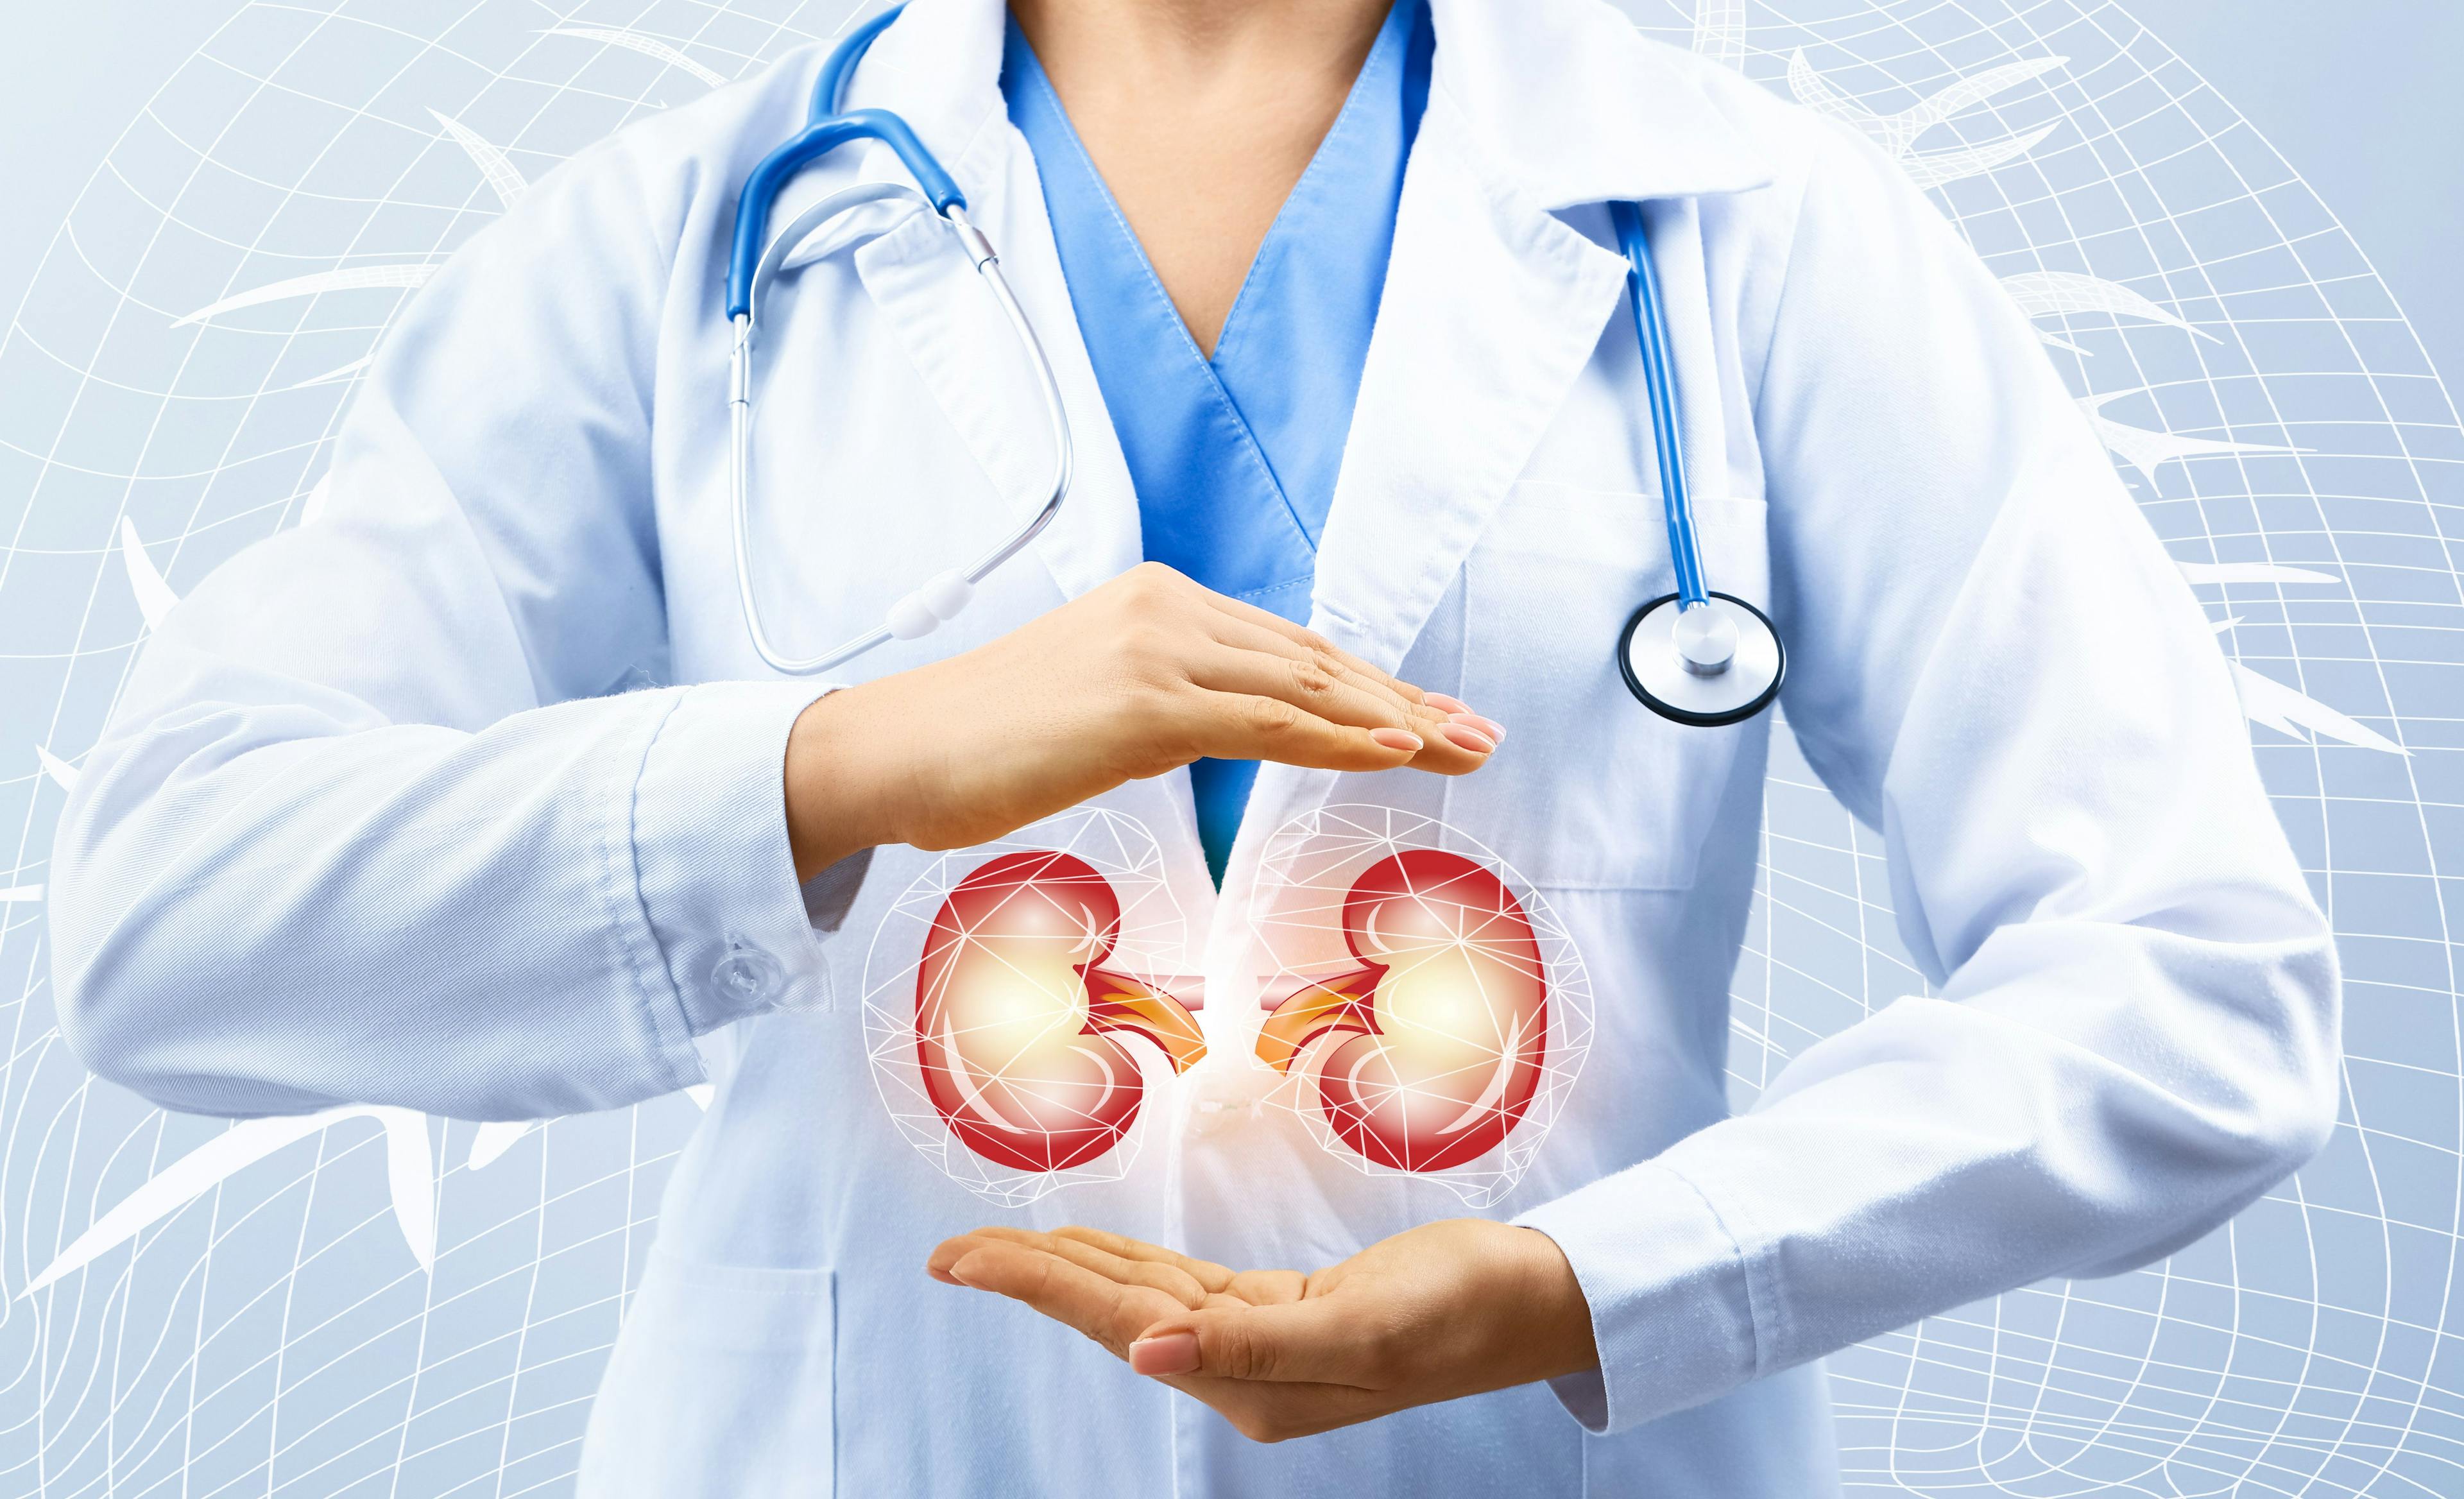 Clinician Presenting Kidneys | image credit: Pixel-Shot - stock.adobe.com